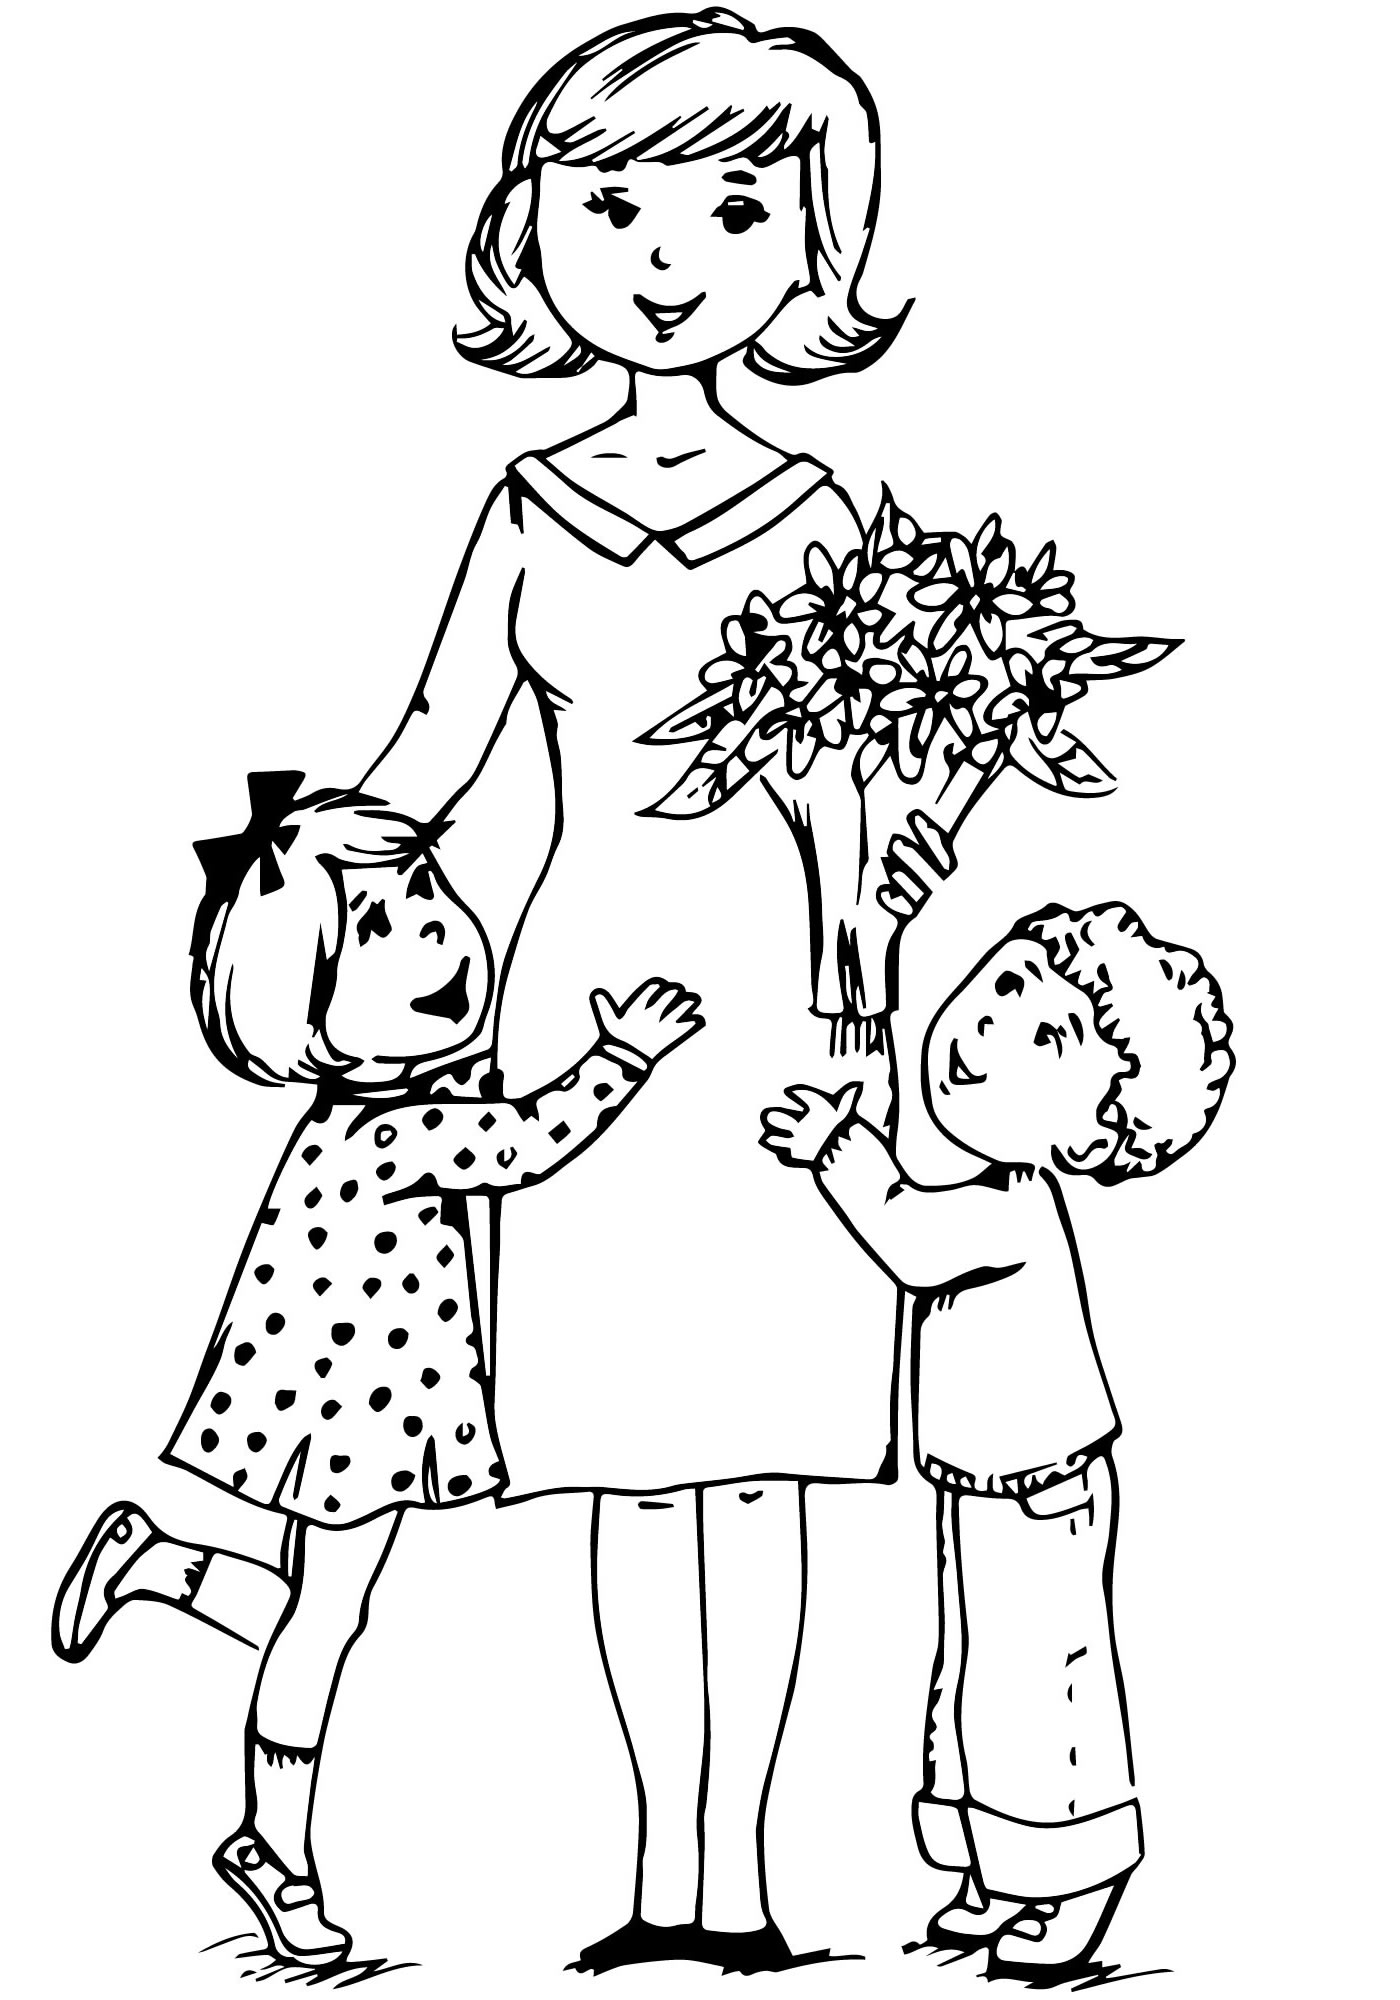 Дама мама а4. Раскраска ко Дню матери. Мама раскраска для детей. Рисунок ко Дню матери раскраска. Воспитатель раскраска для детей.